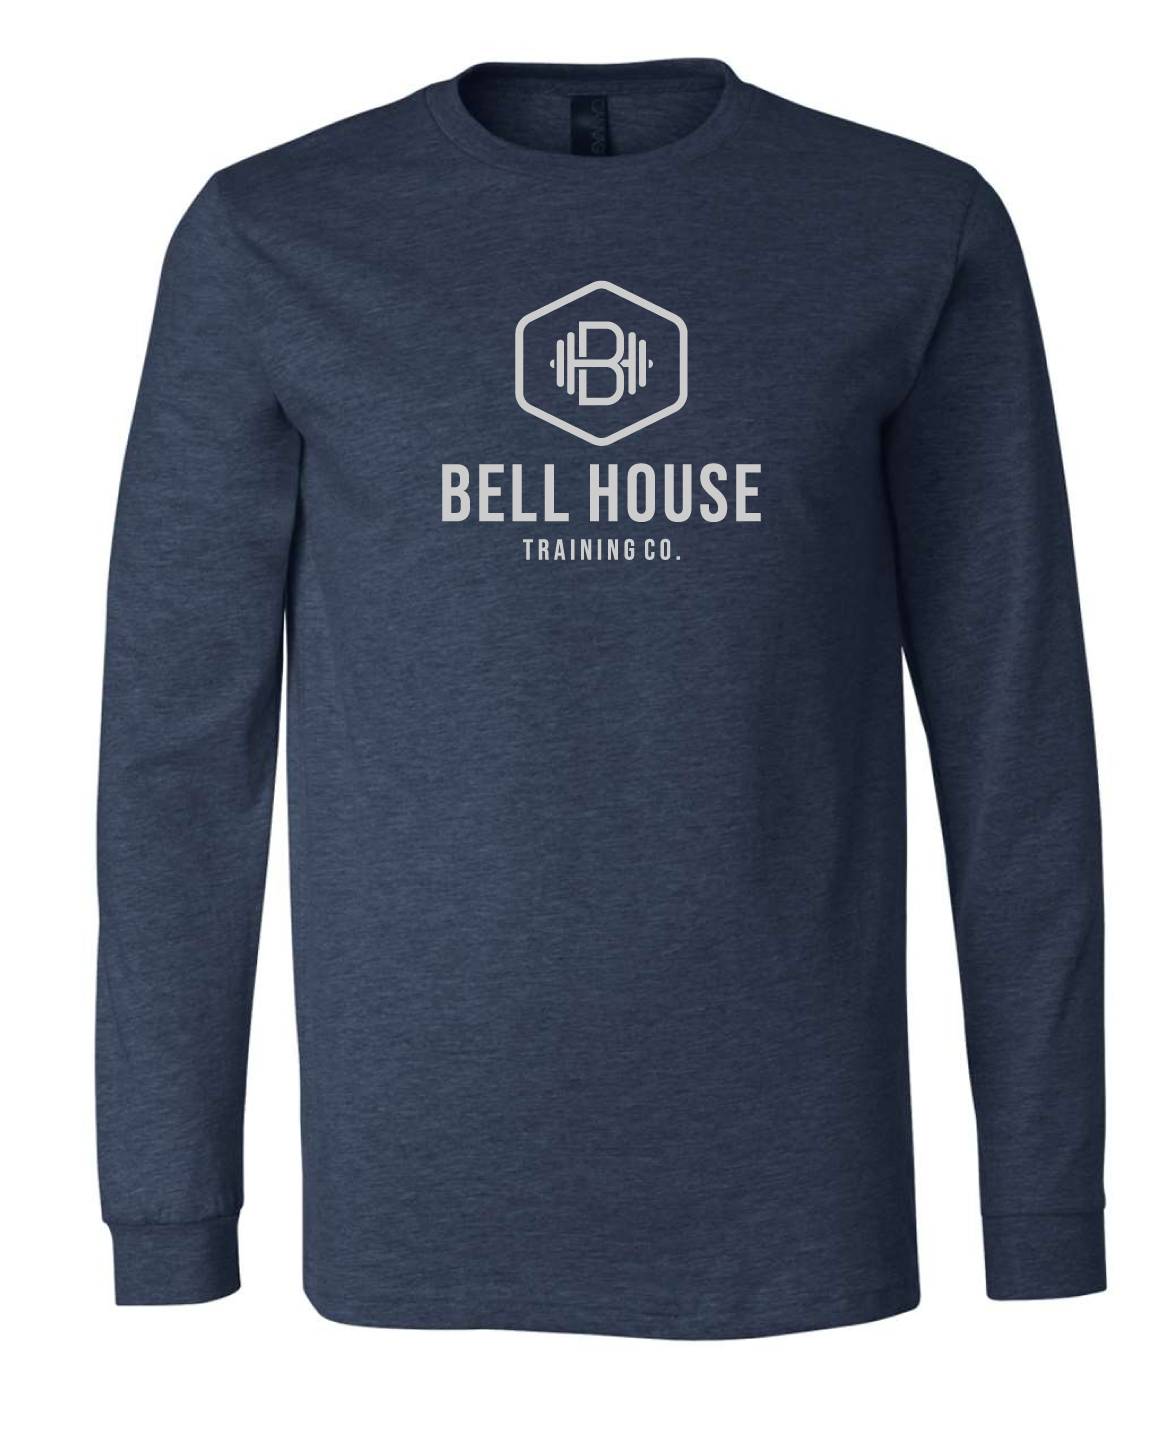 Bell House - Unisex Premium Long Sleeve T-Shirt